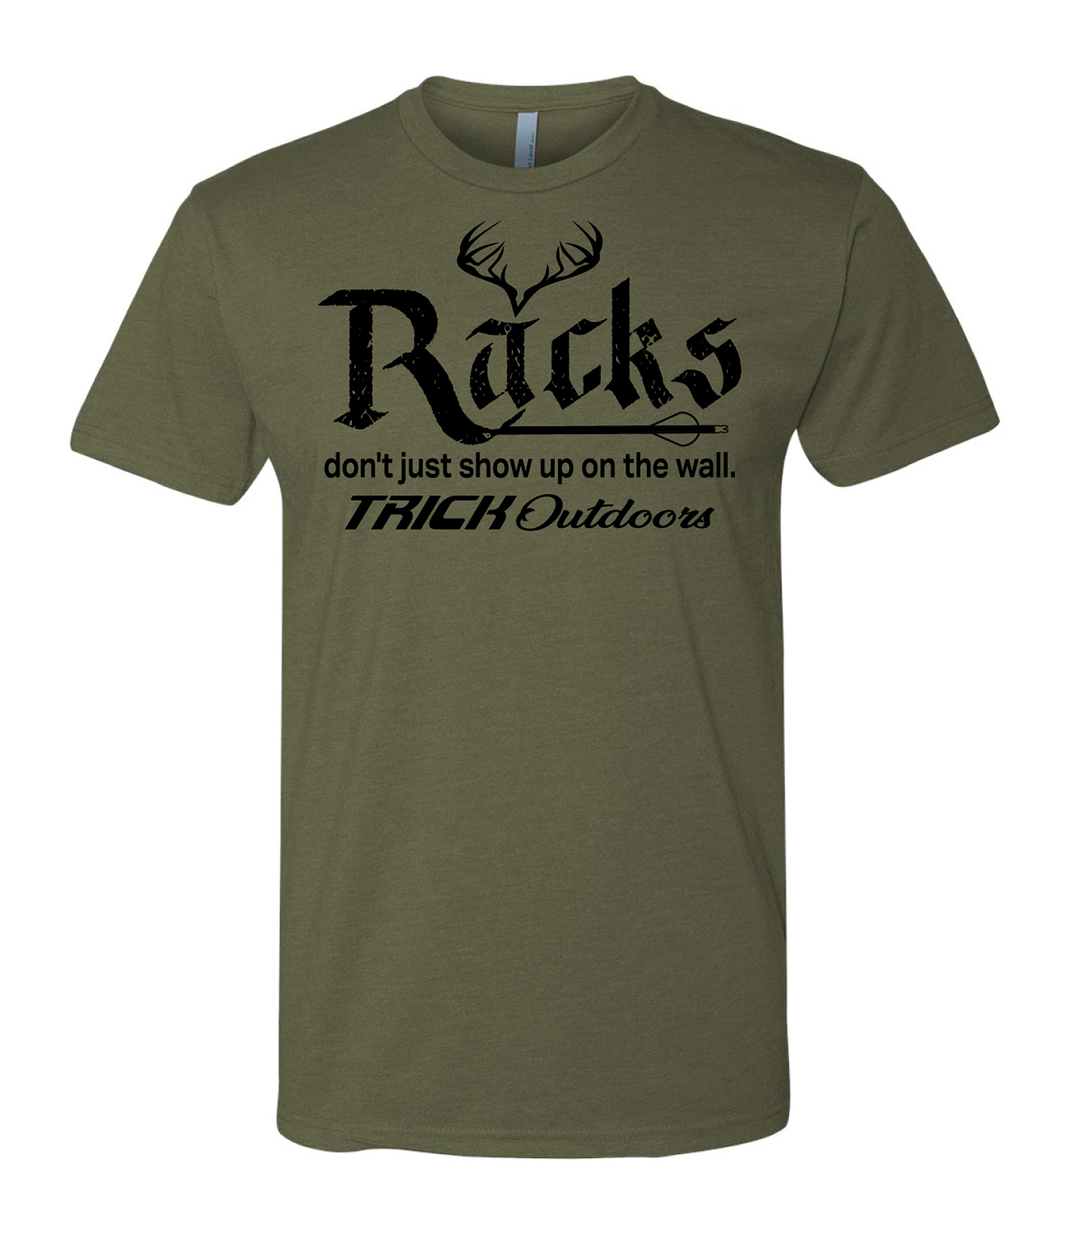 hunting slogan tee shirt